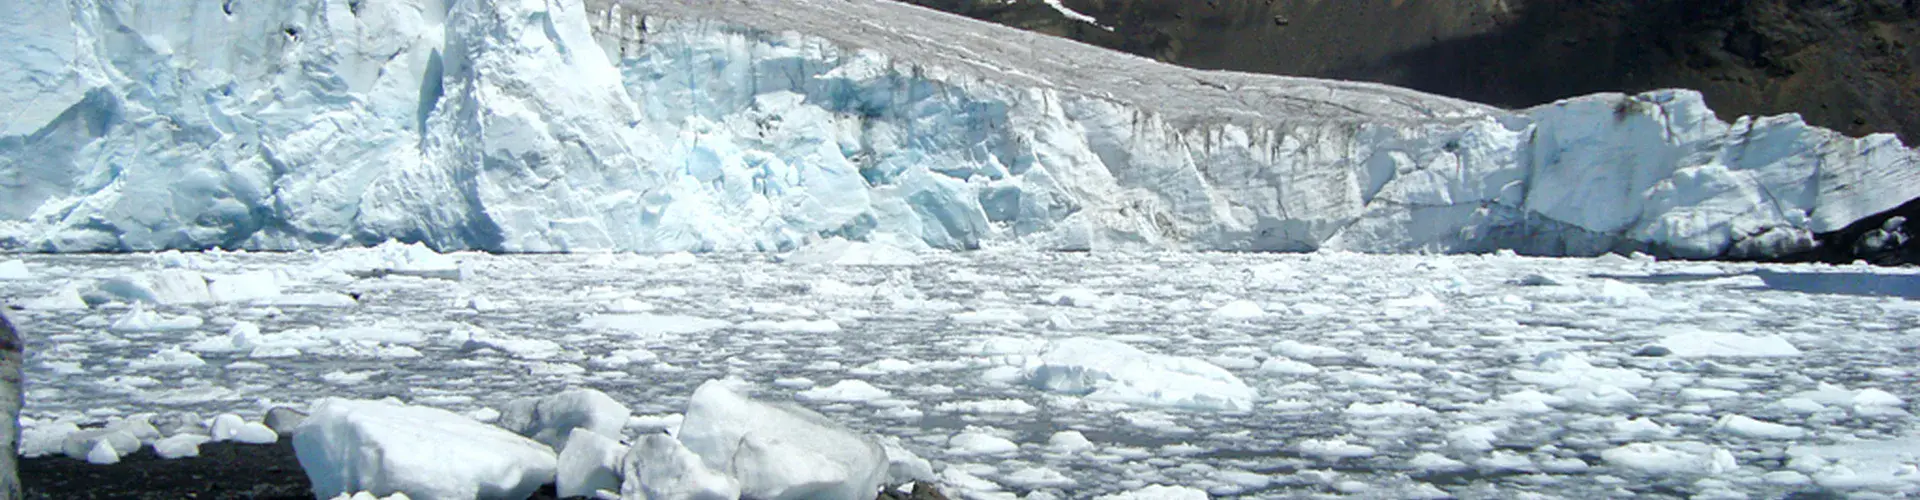 Pastoruri Glacier (Credit: Edubucher/Wikimedia Commons)